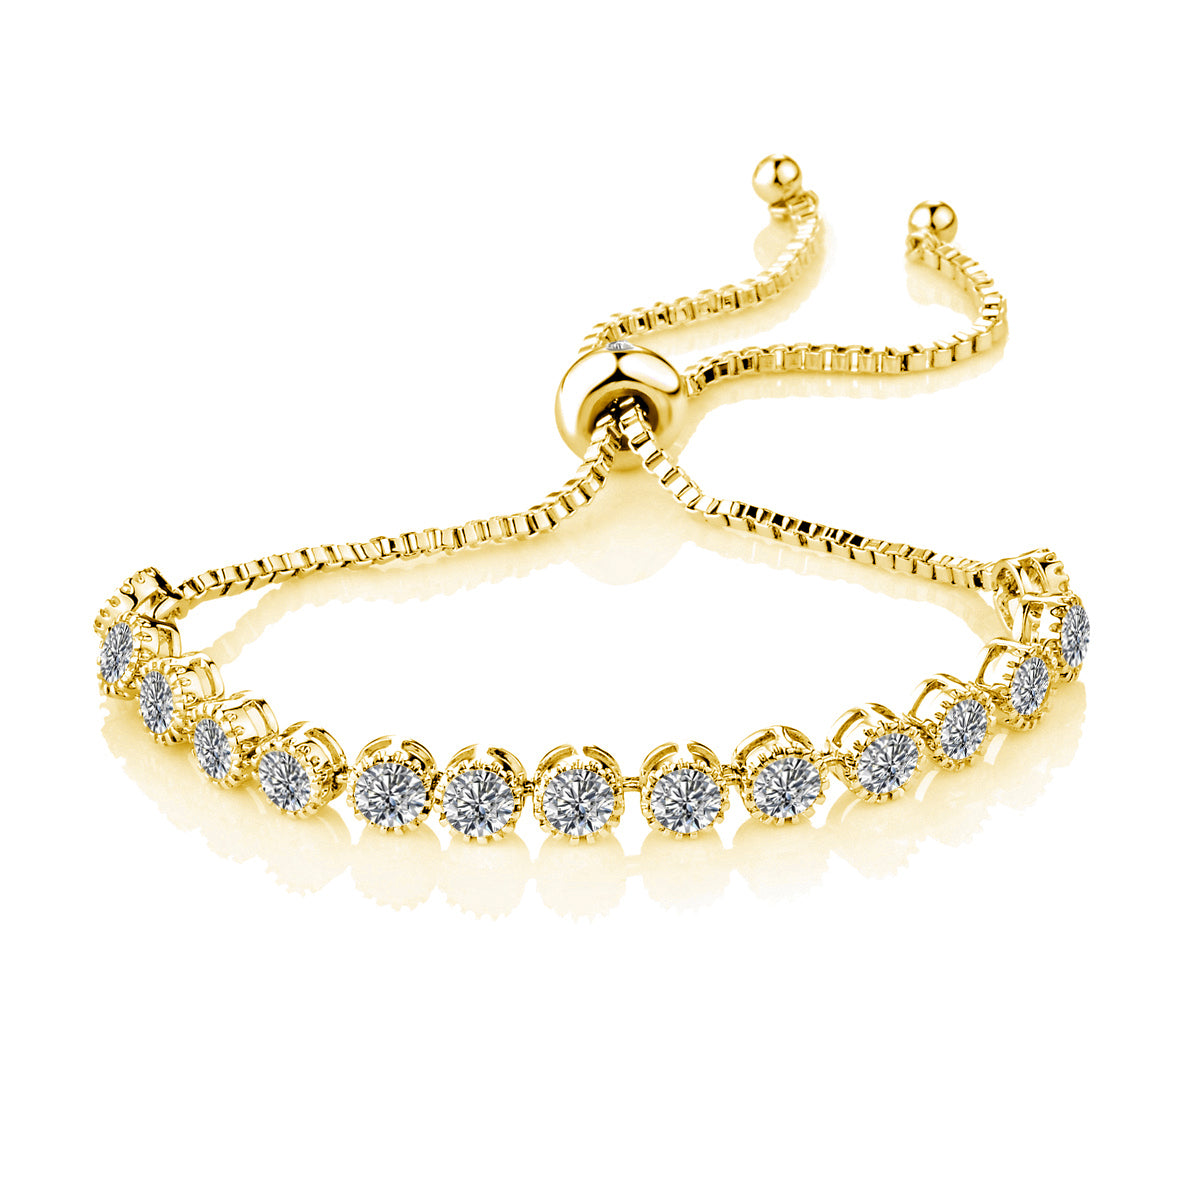 Gold Plated Friendship Bracelet with Zircondia® Crystals by Philip Jones Jewellery